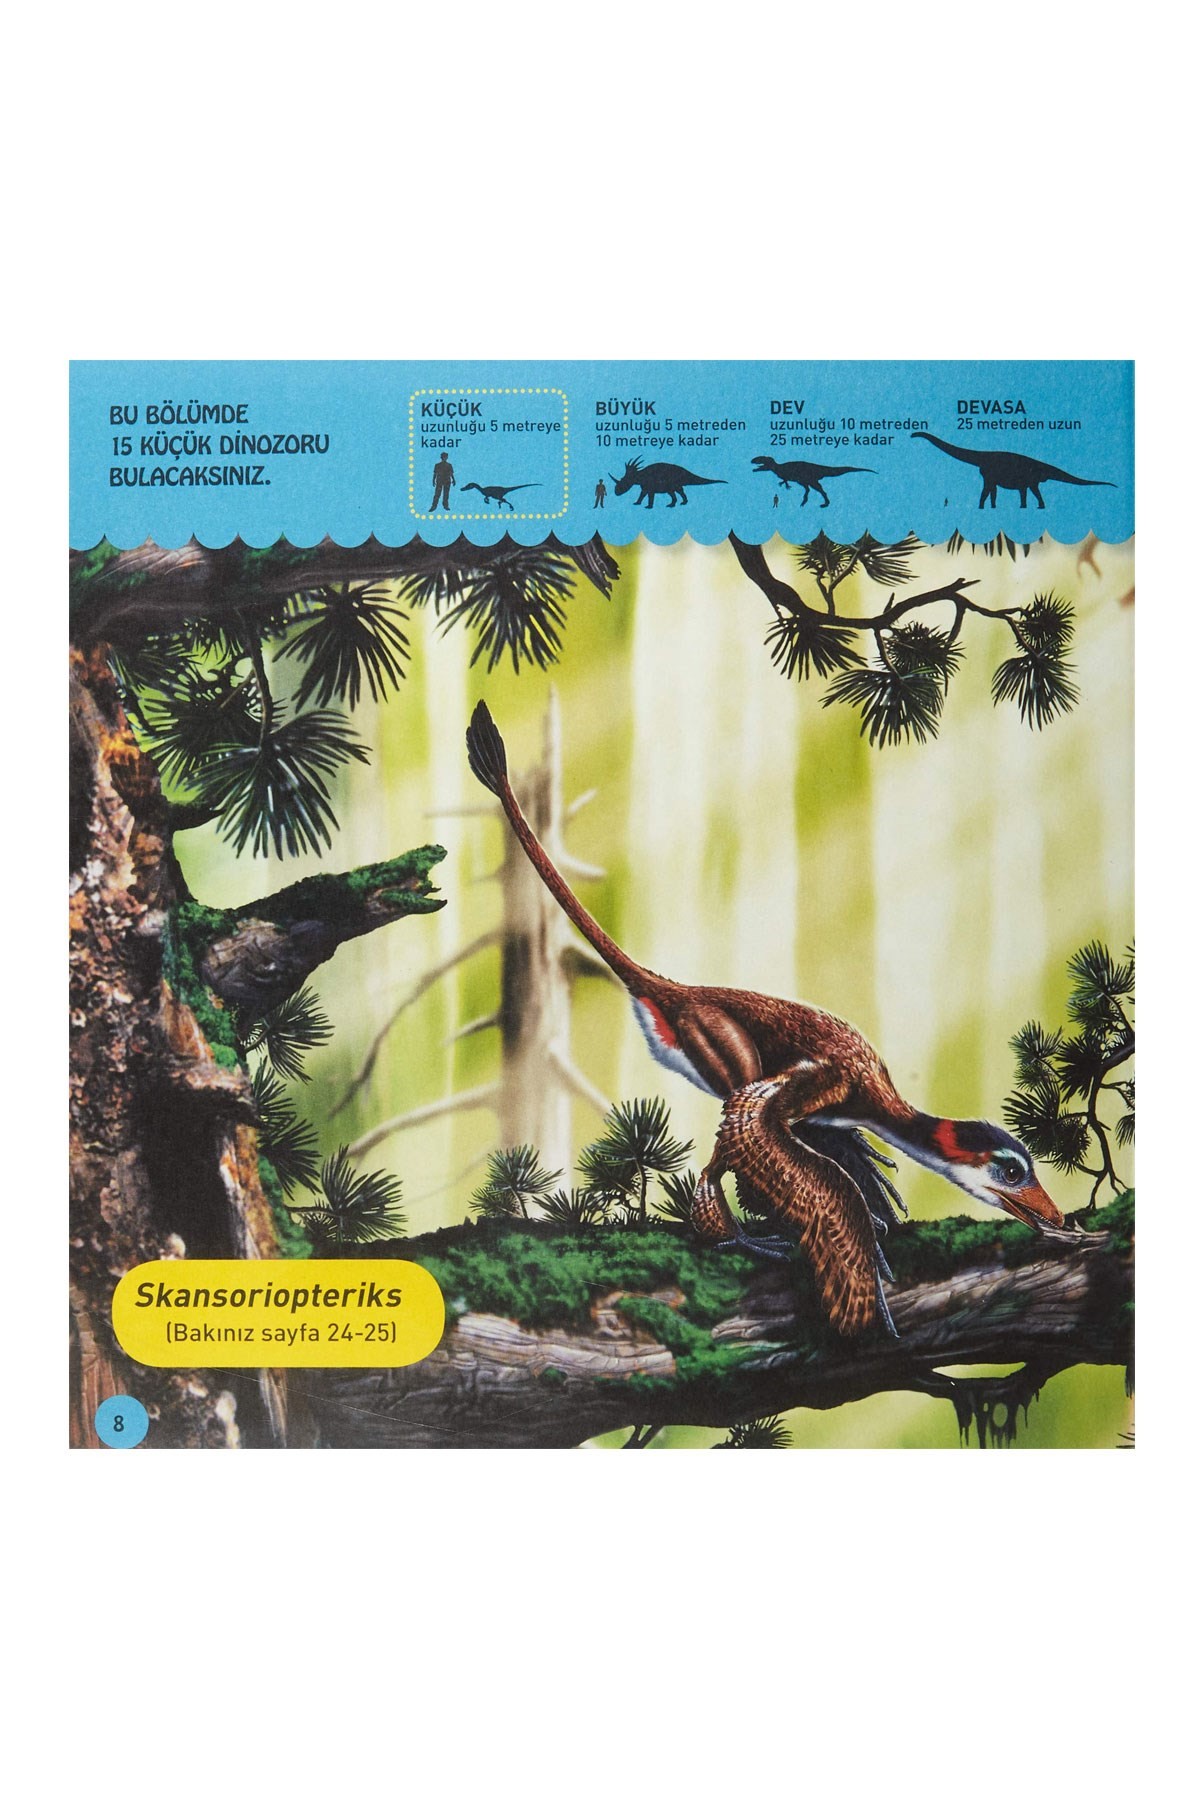 National Geographic Kids Dinozor Kitabım Dinozorlar